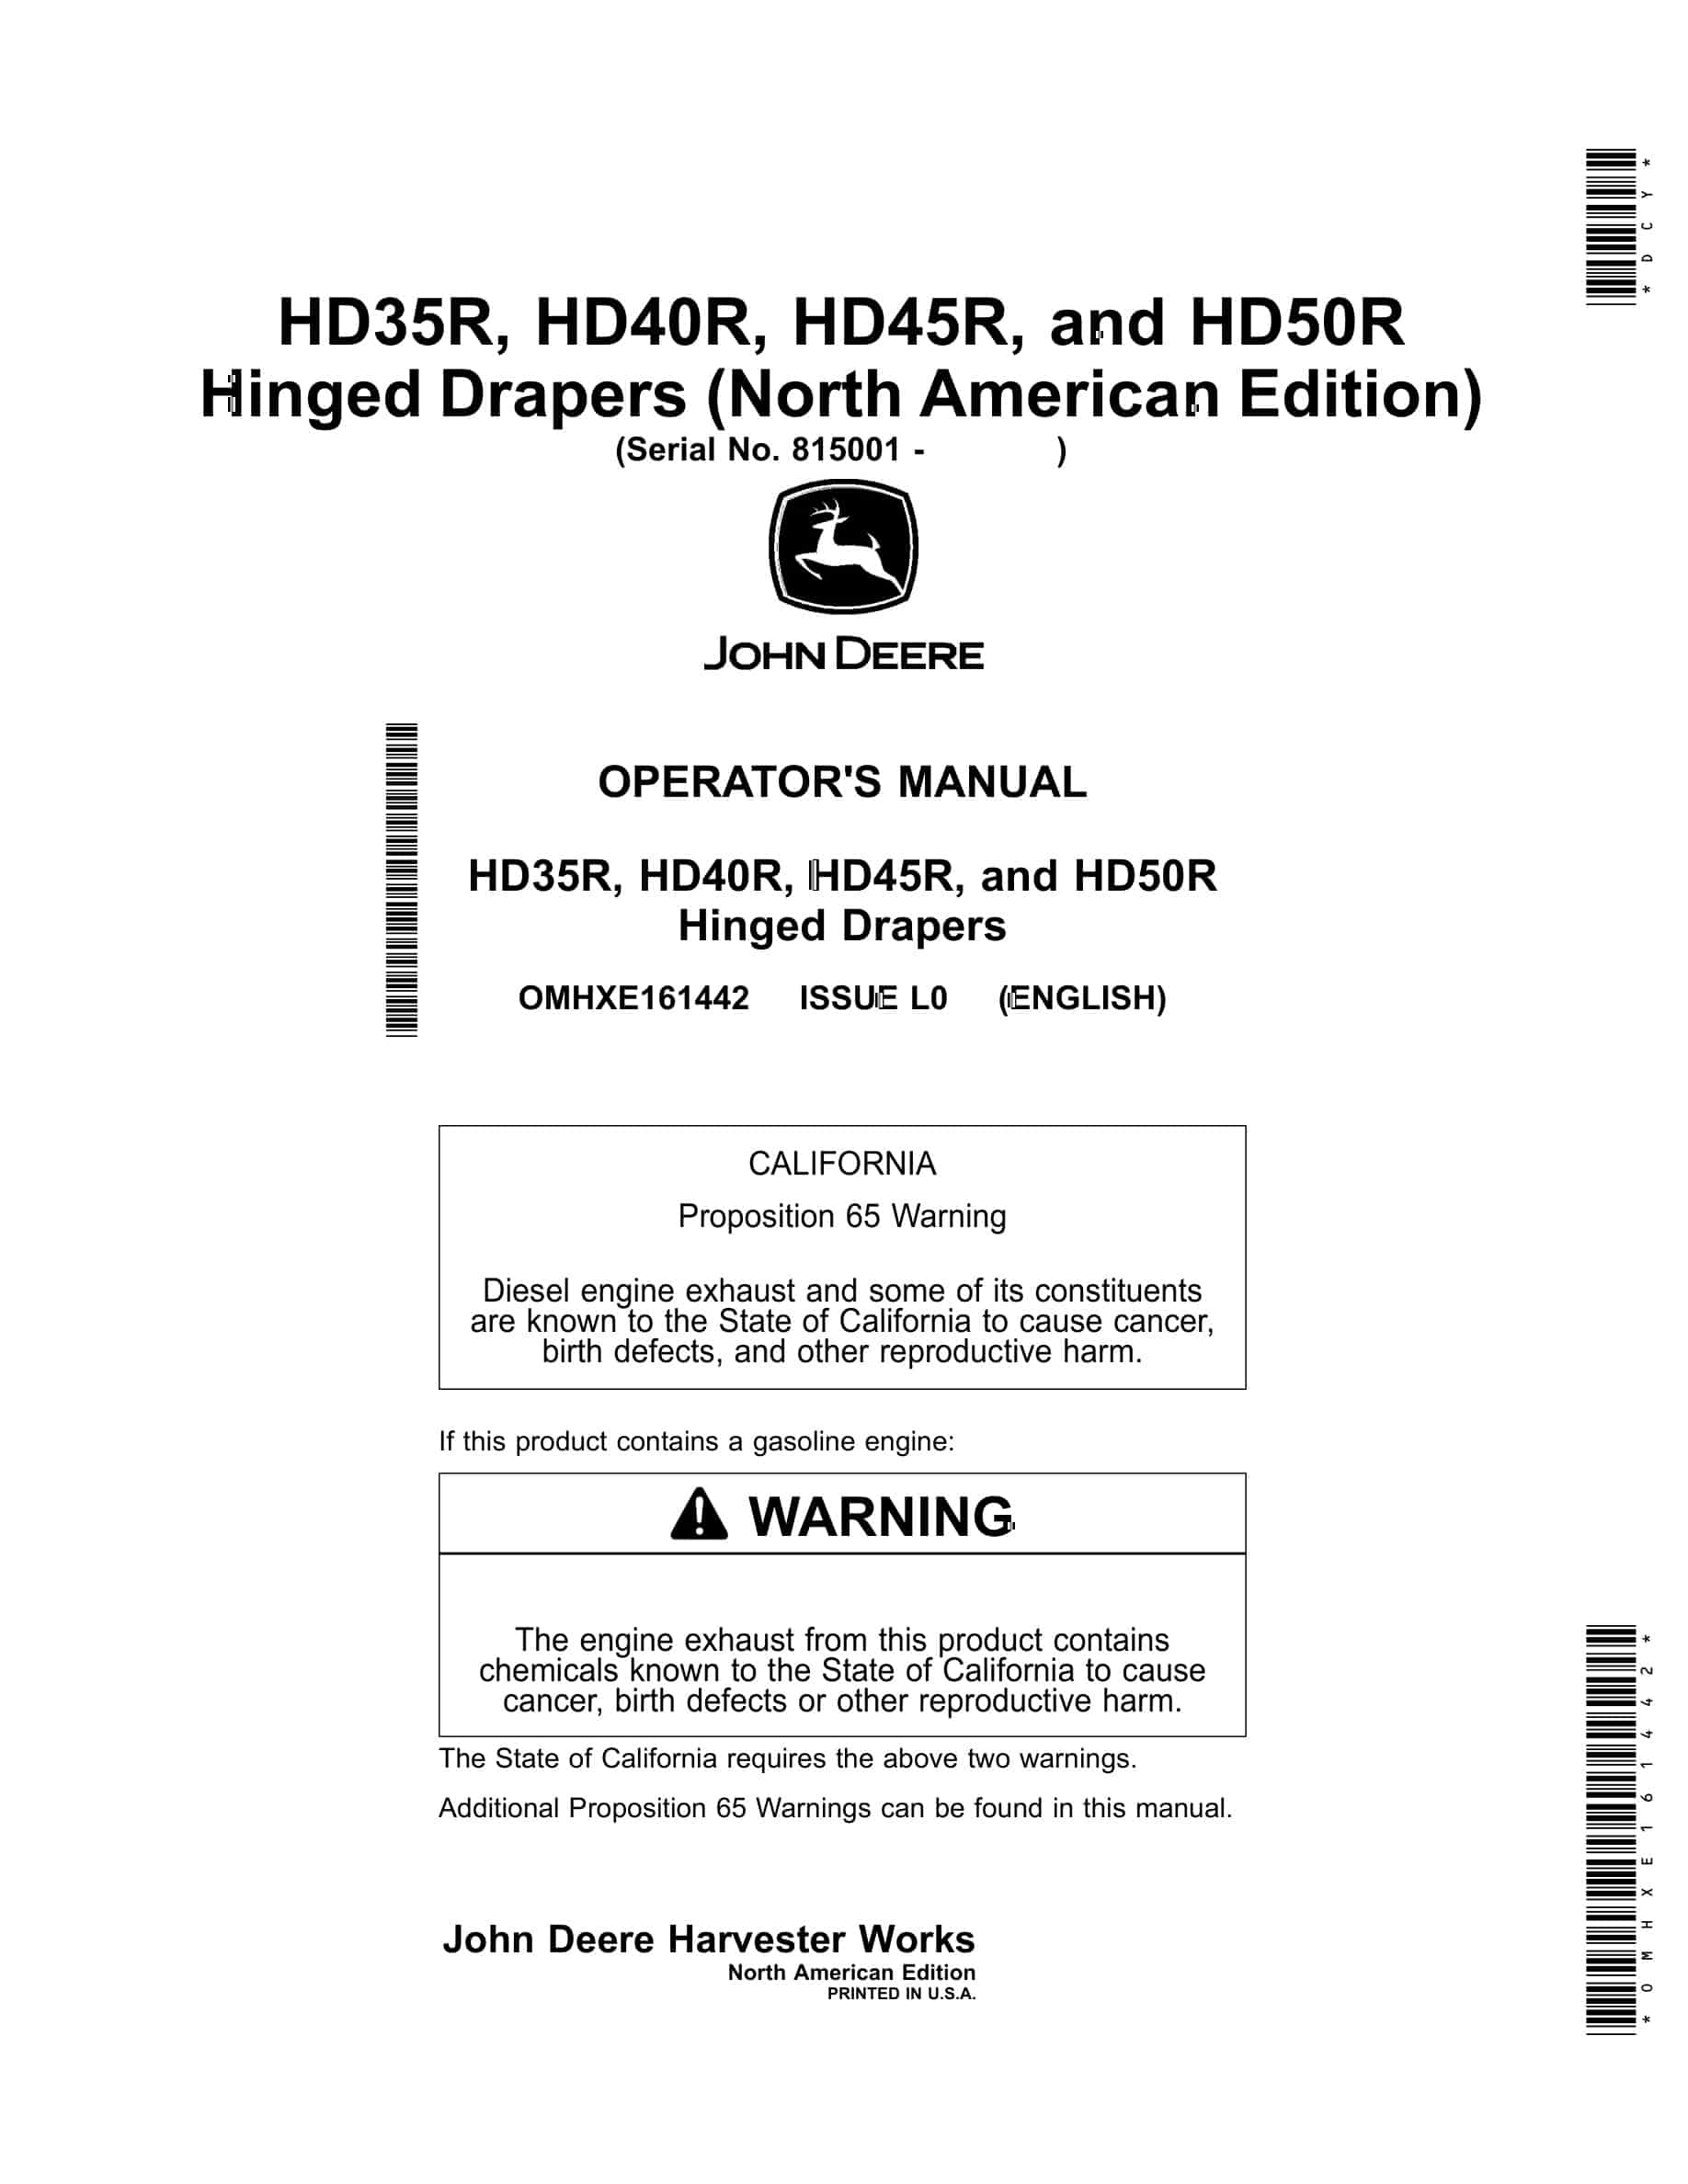 John Deere HD35R, HD40R, HD45R, and HD50R Hinged Drapers Operator Manual OMHXE161442-1